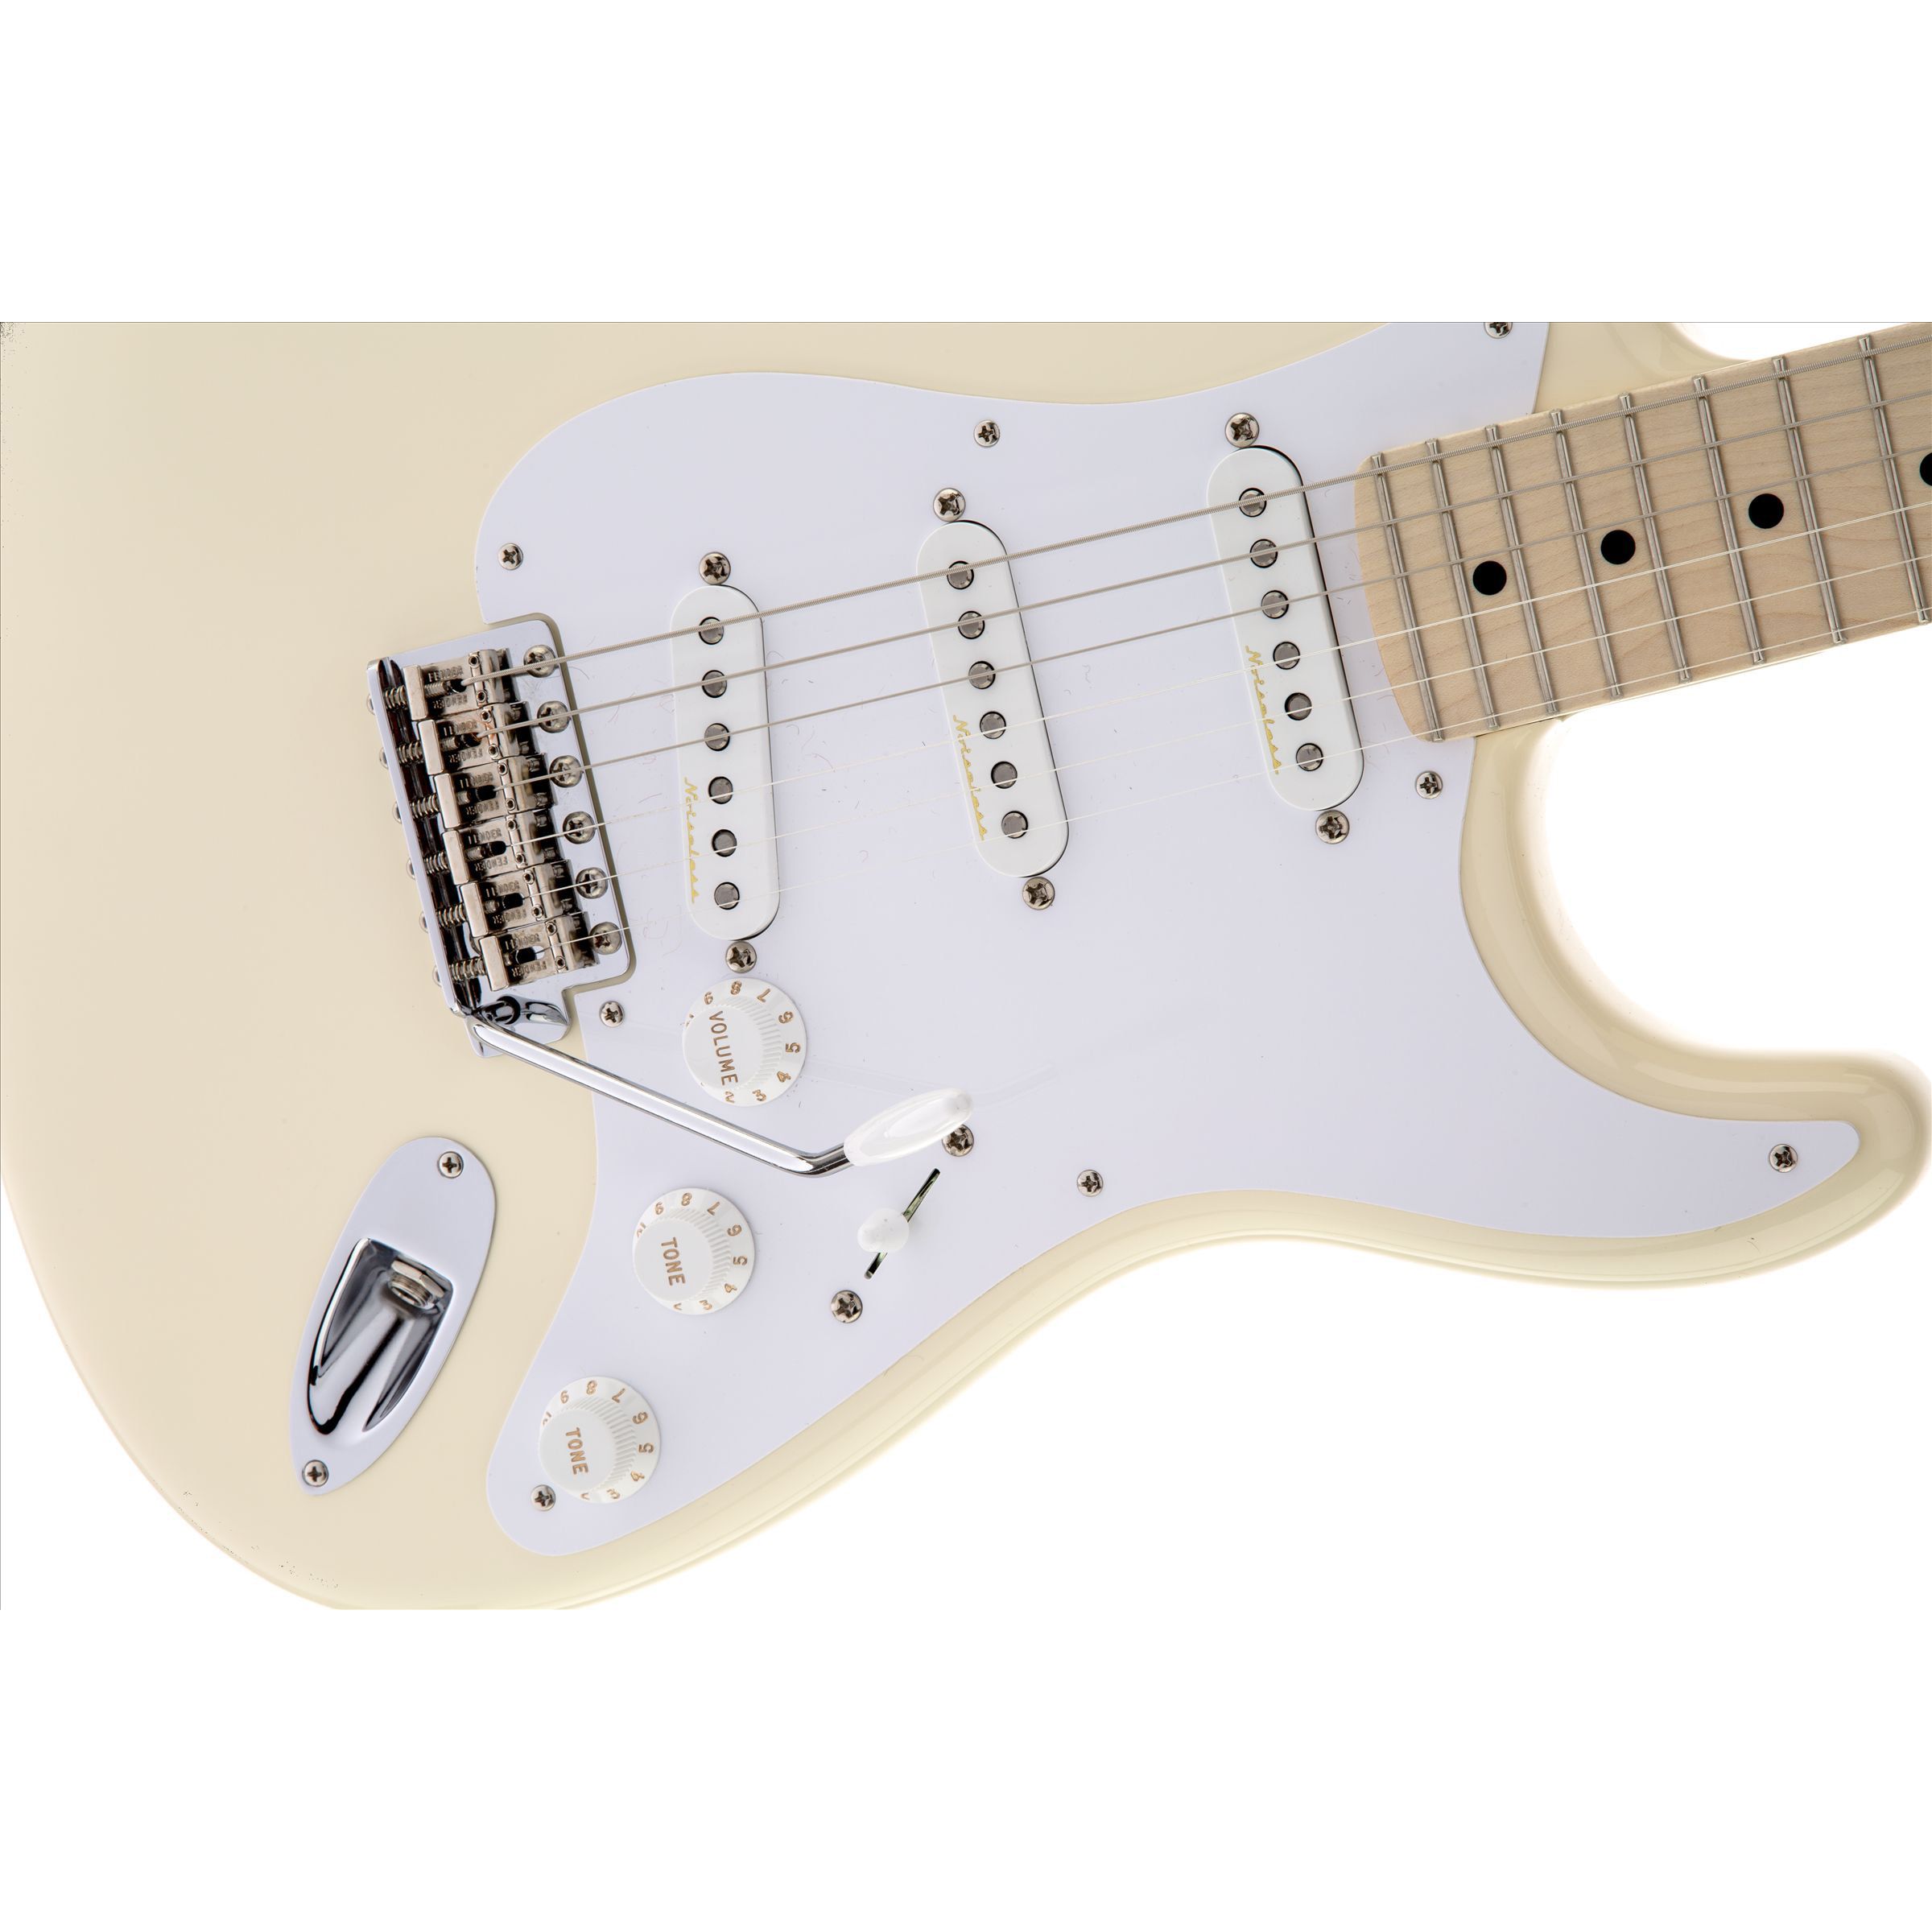 White stratocaster. Электрогитара Fender Stratocaster. Fender Stratocaster белый. Fender Stratocaster Olympic White. Fender Stratocaster цвета.